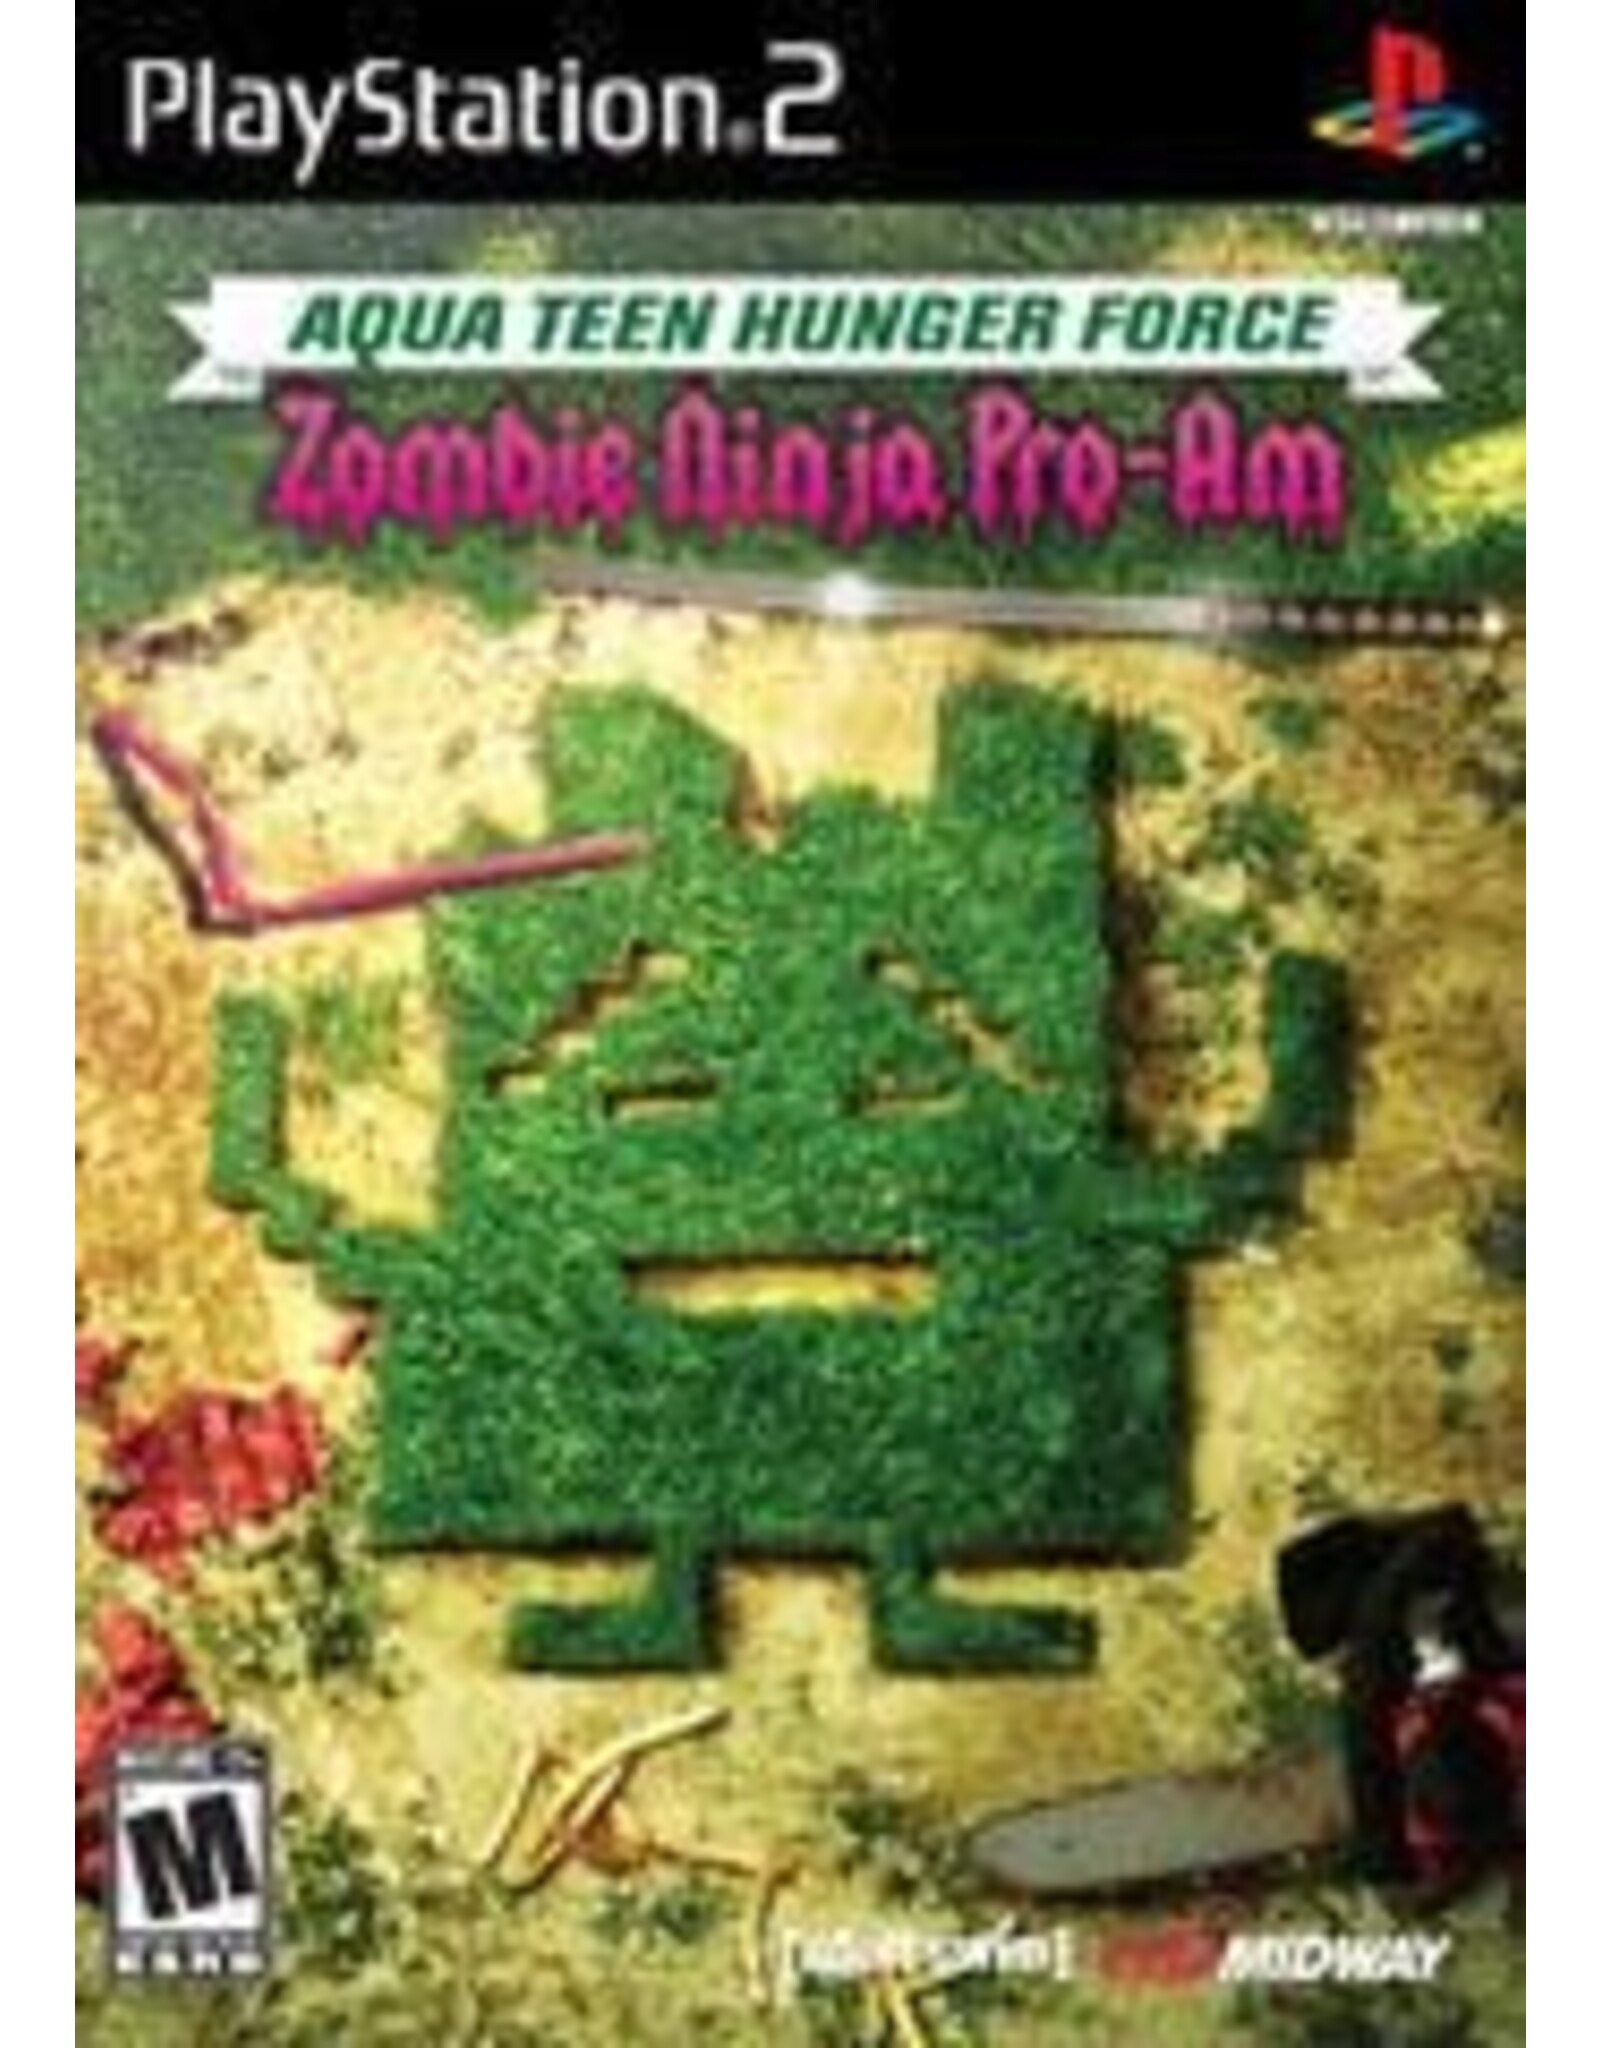 Playstation 2 Aqua Teen Hunger Force Zombie Ninja Pro-Am (No Manual)